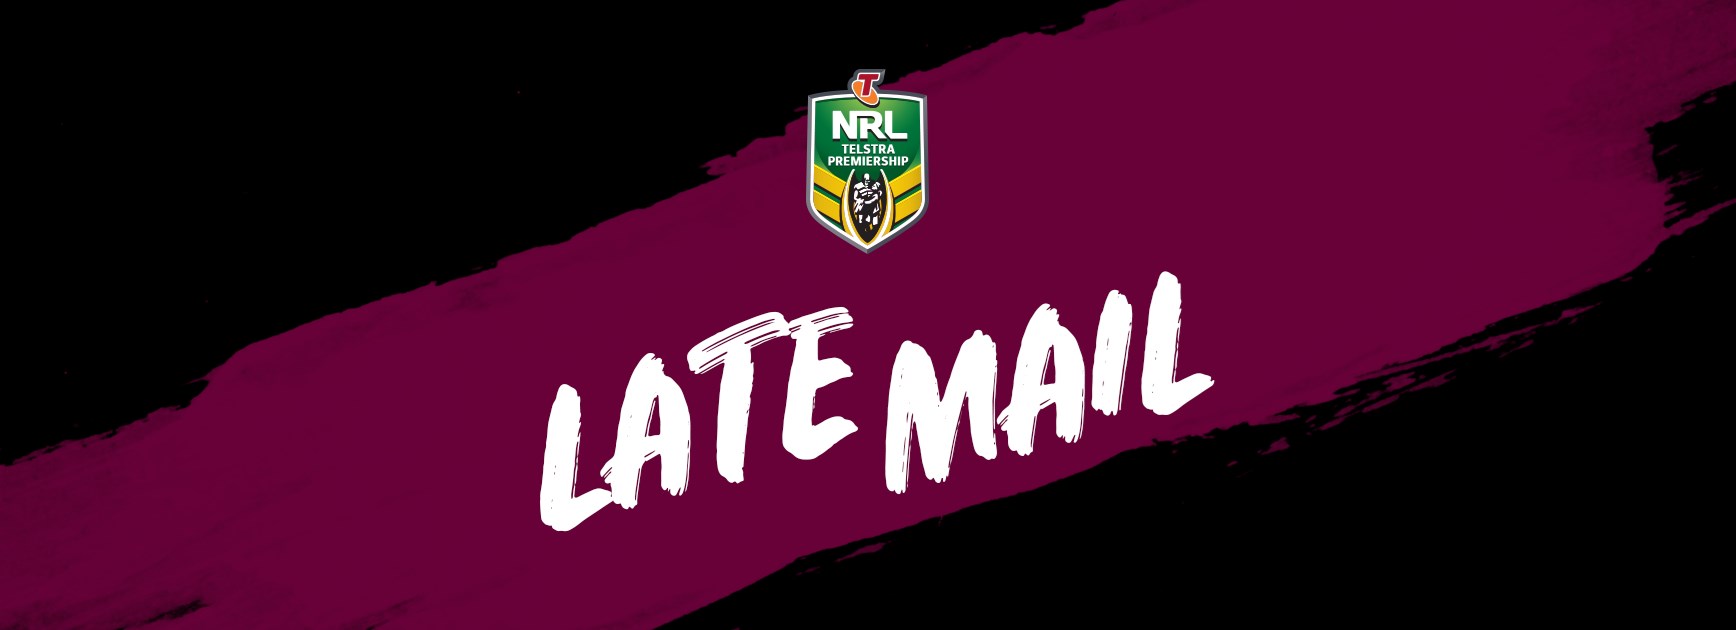 NRL Late Mail - Round 23